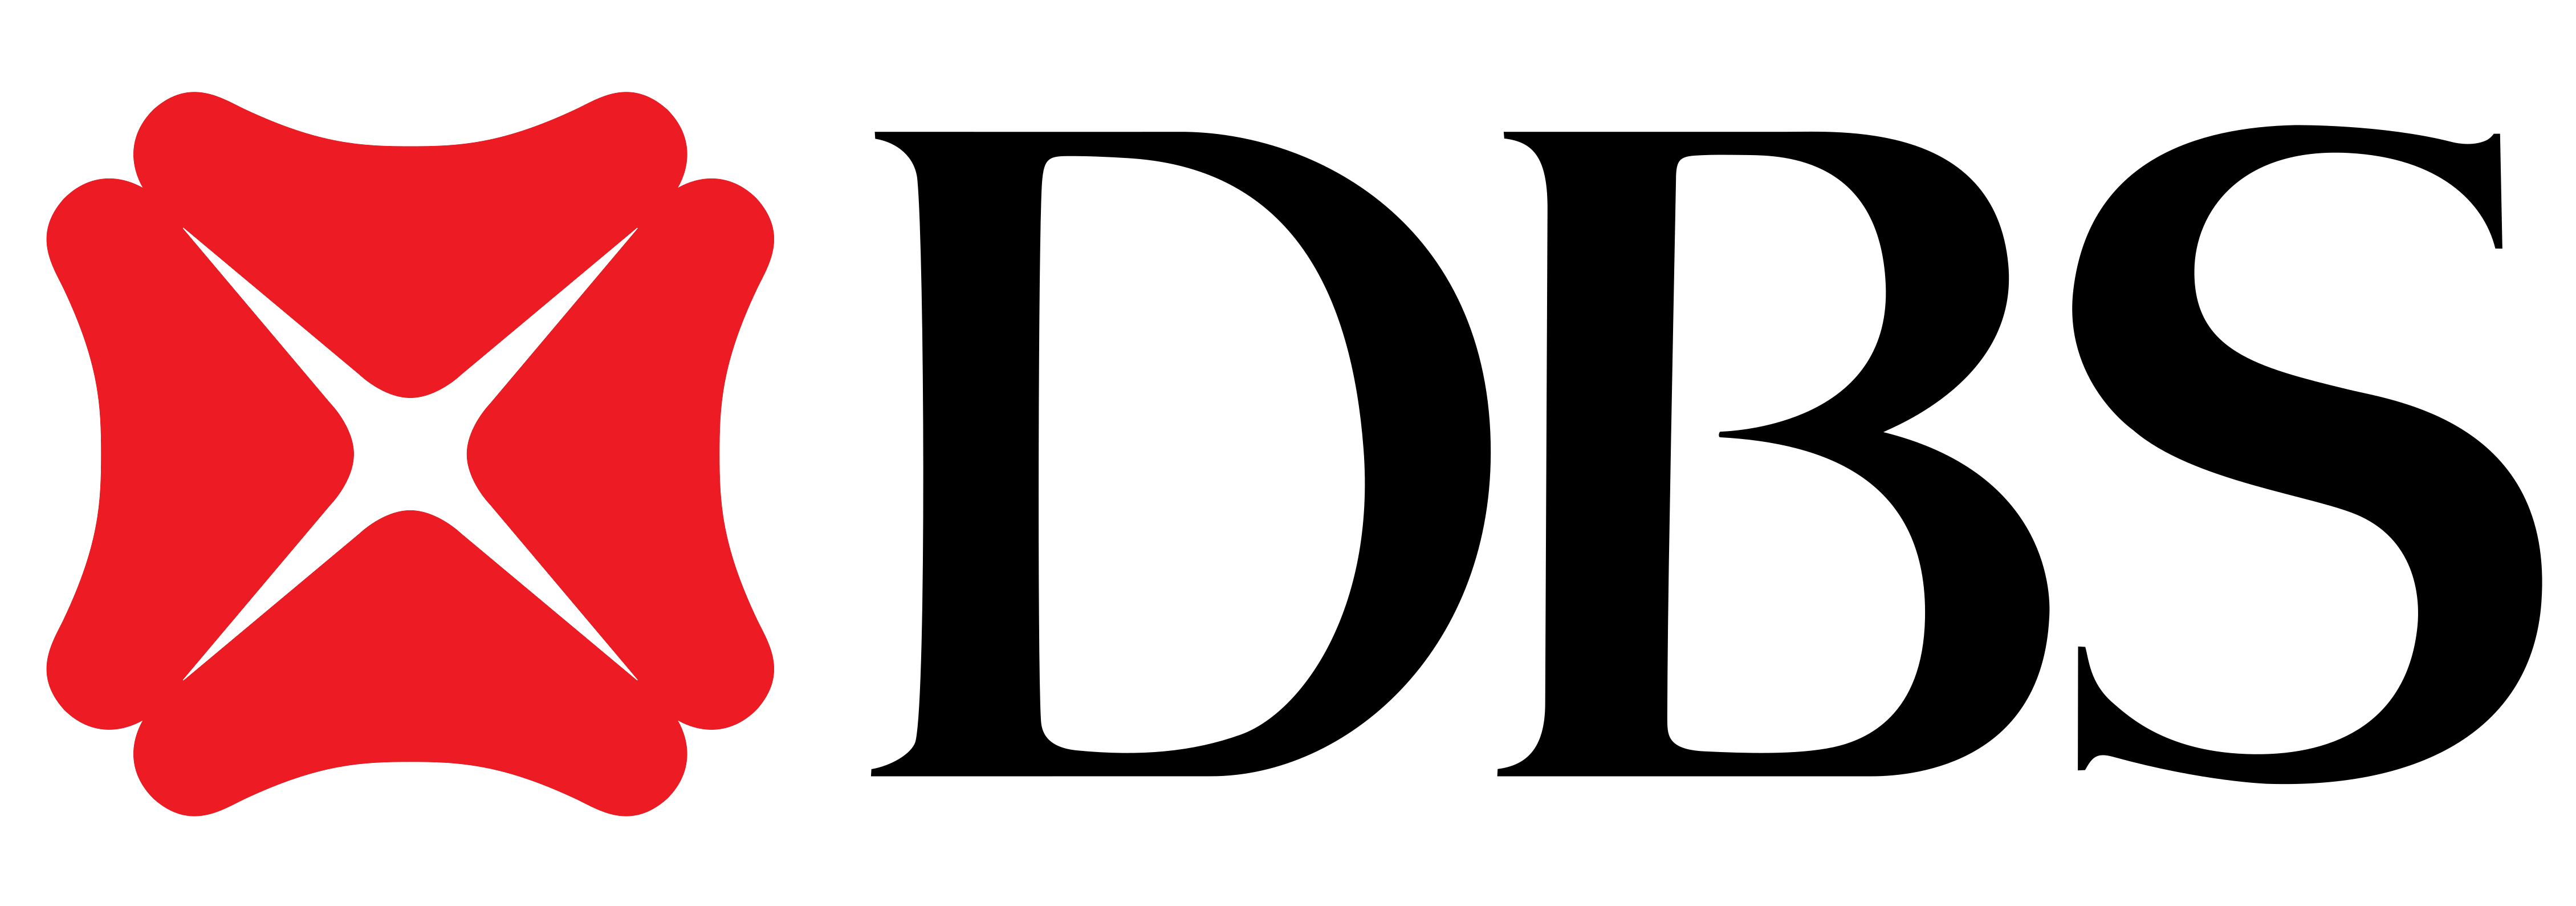 Dbs Logo PNG - 97299